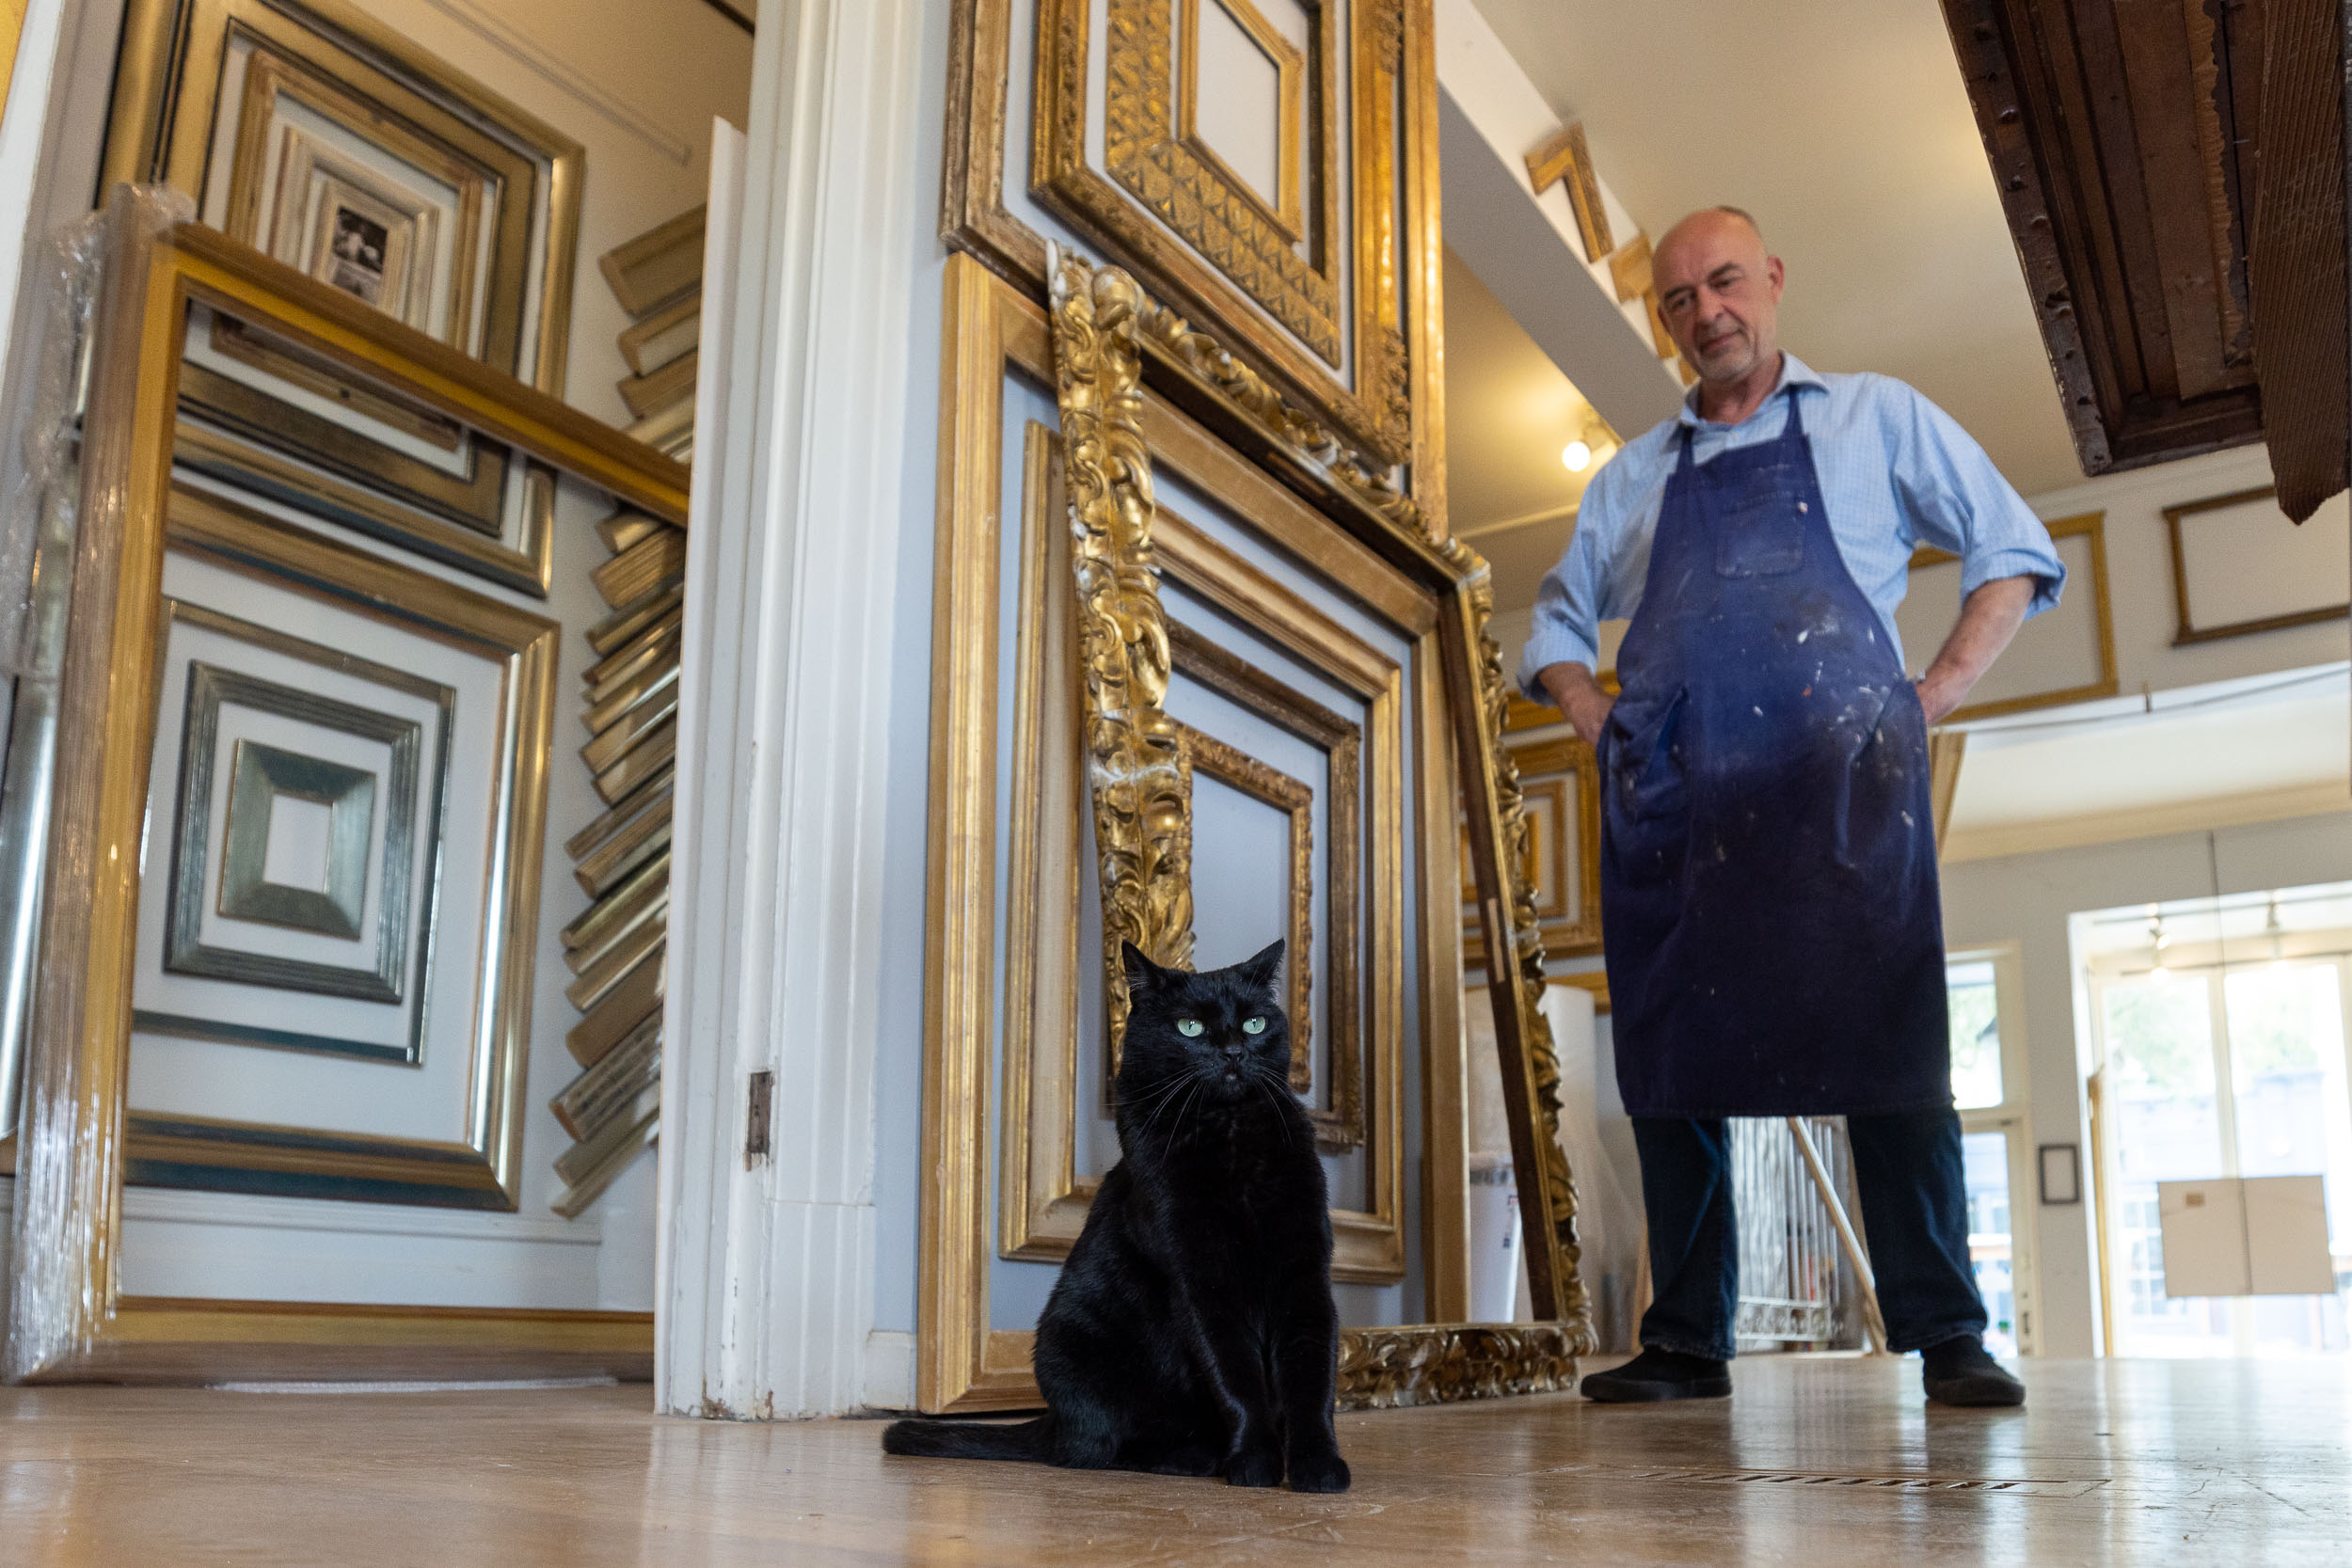 black-cat-in-san-francisco-frame-shop-with-owner-behind-5854